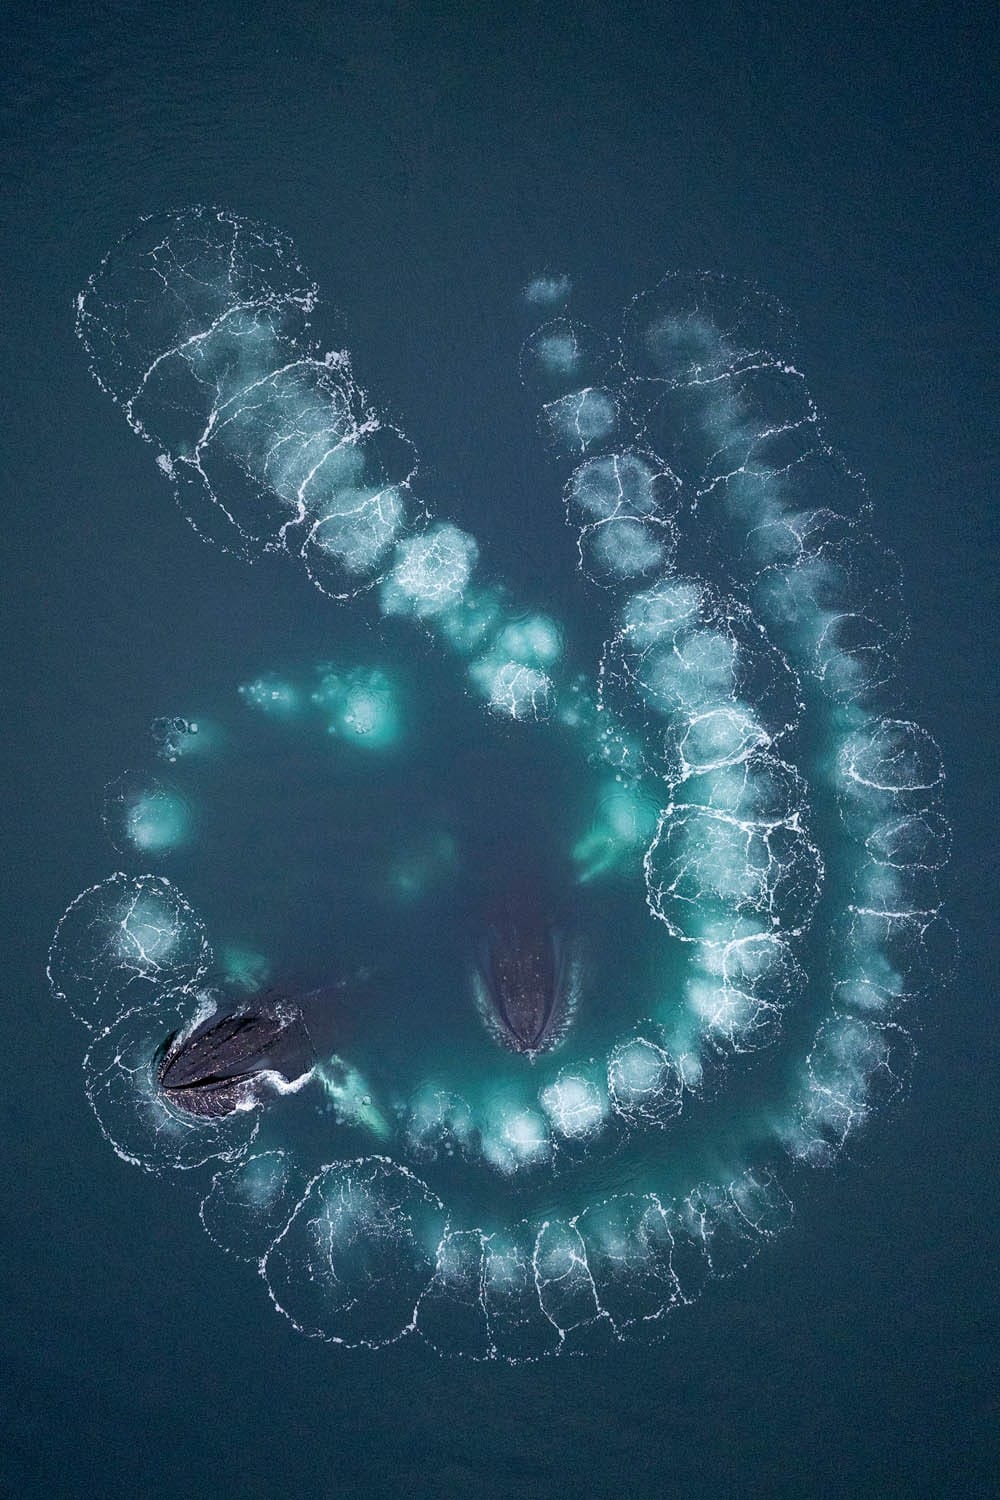 Humpback whales bubble netting